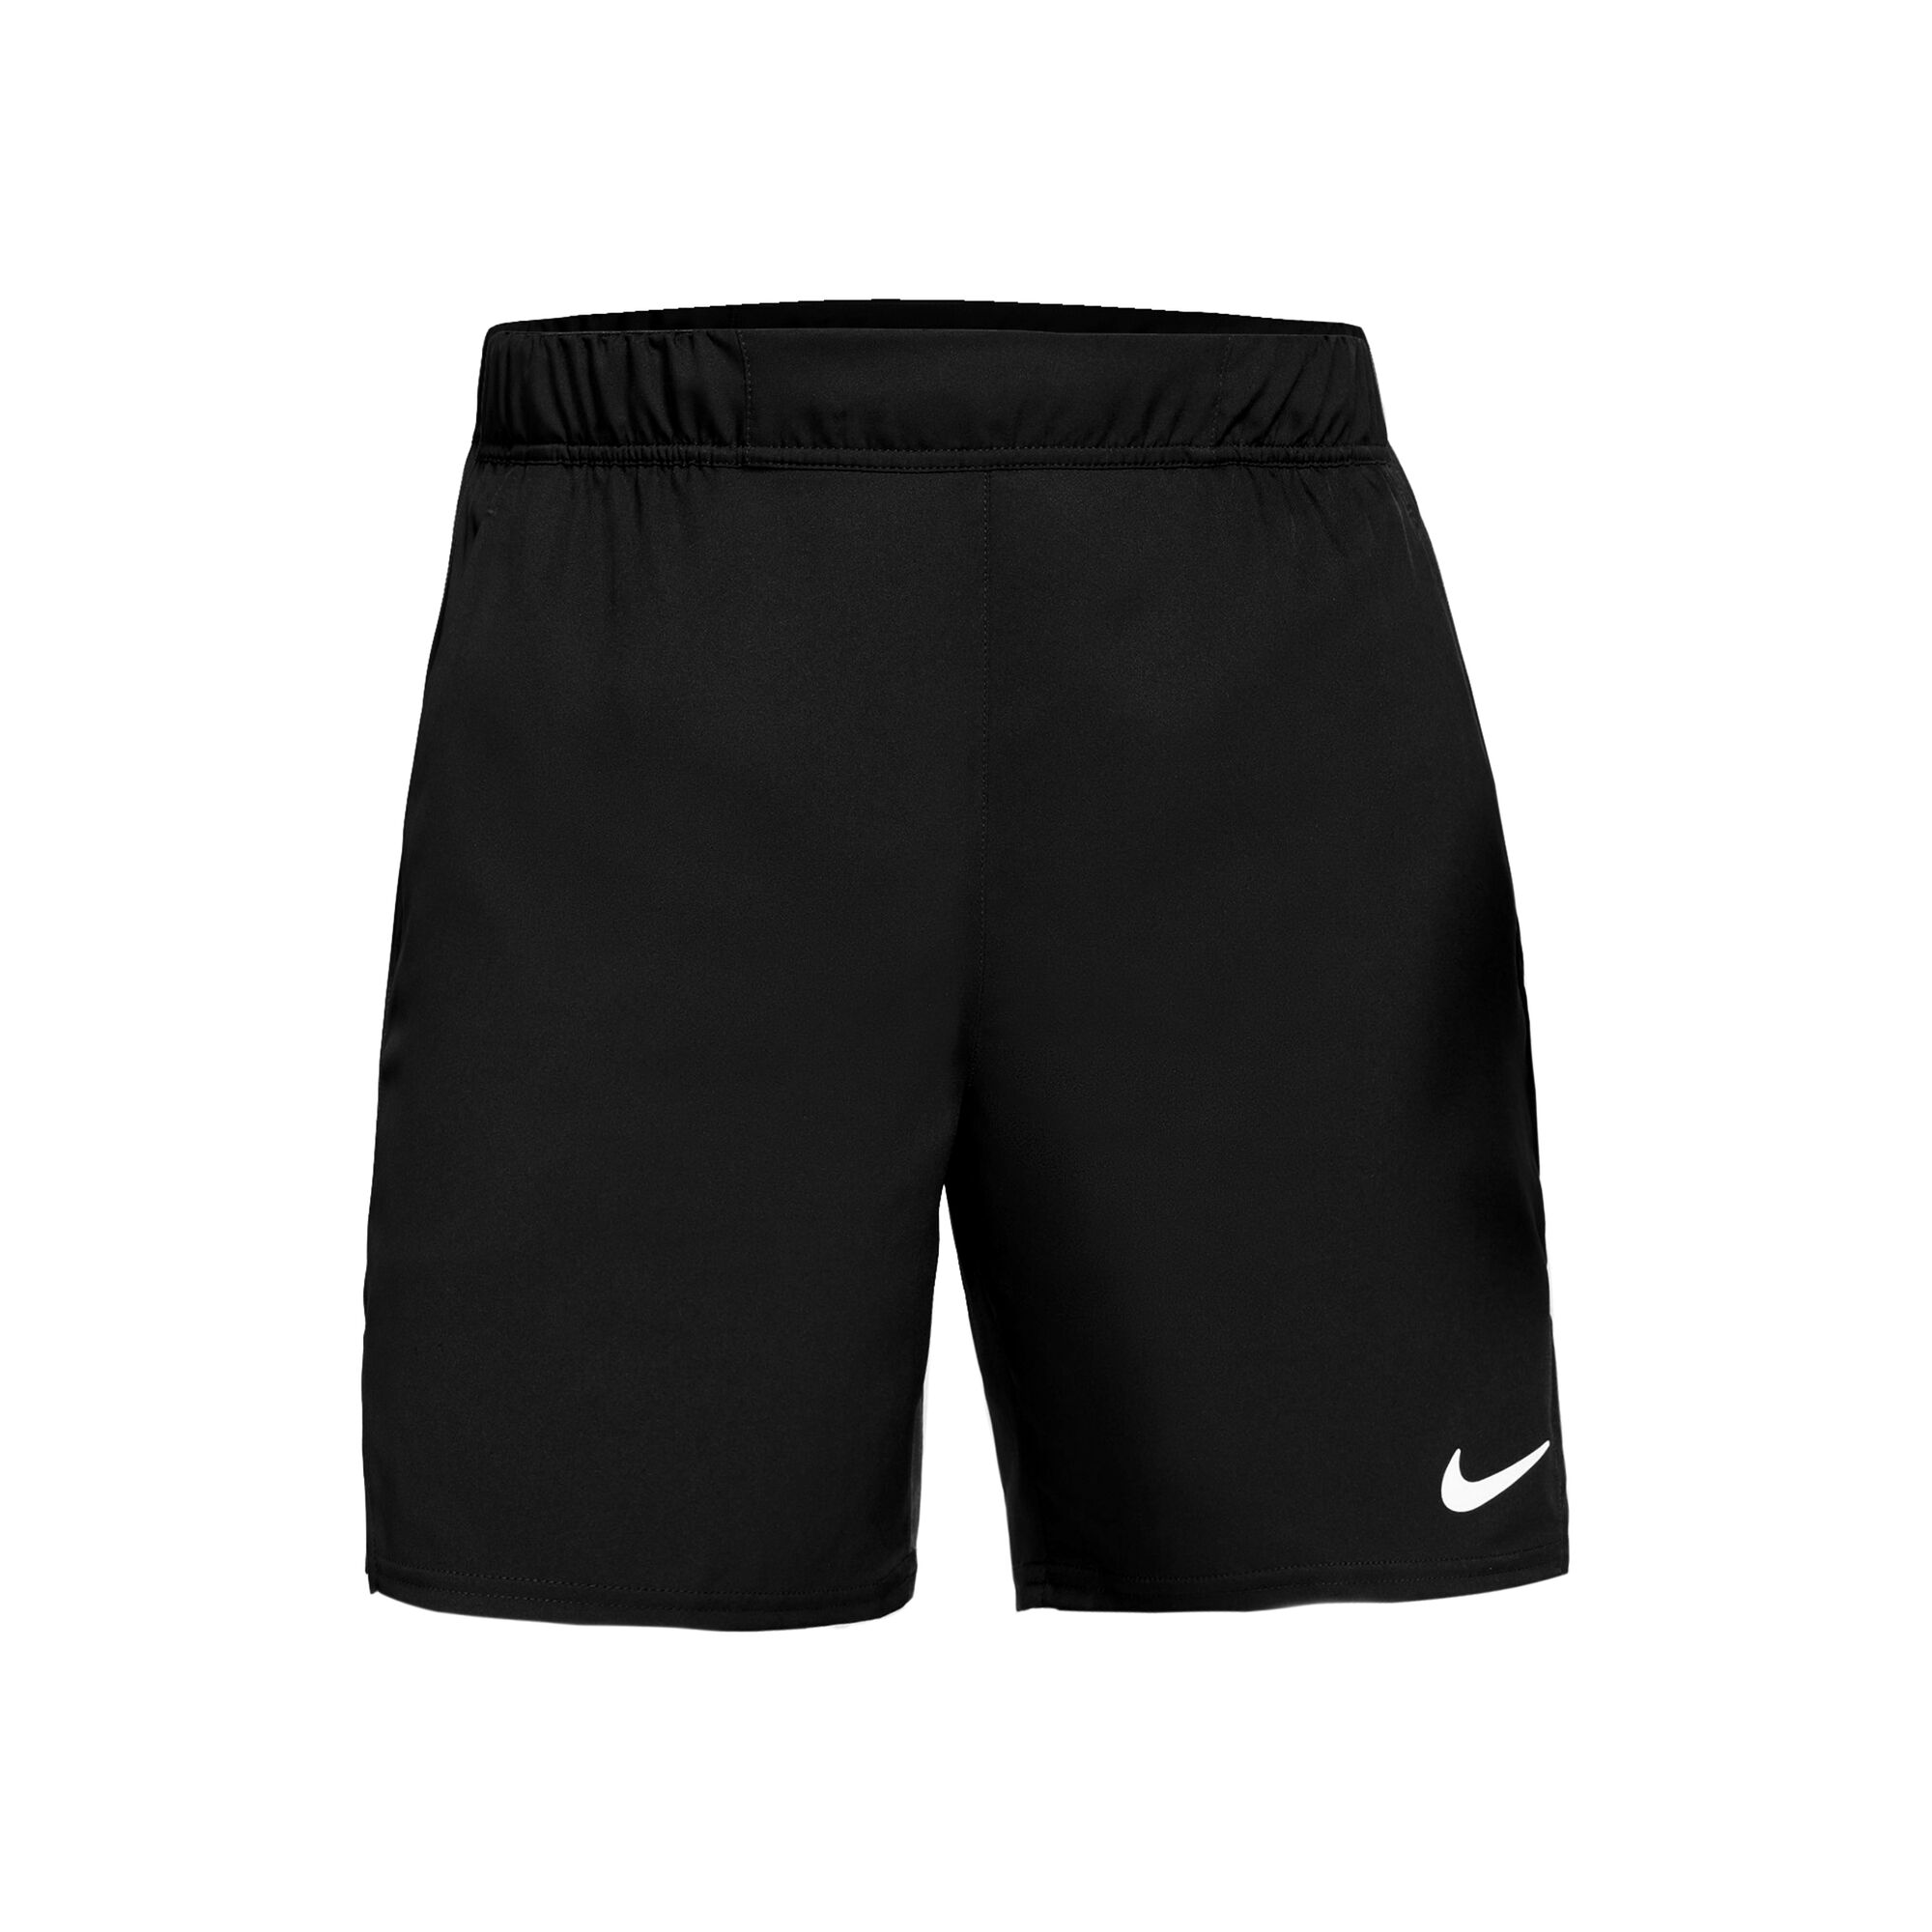 Buy Nike Dri-Fit Victory 7in Shorts Men Black online | Tennis Point UK